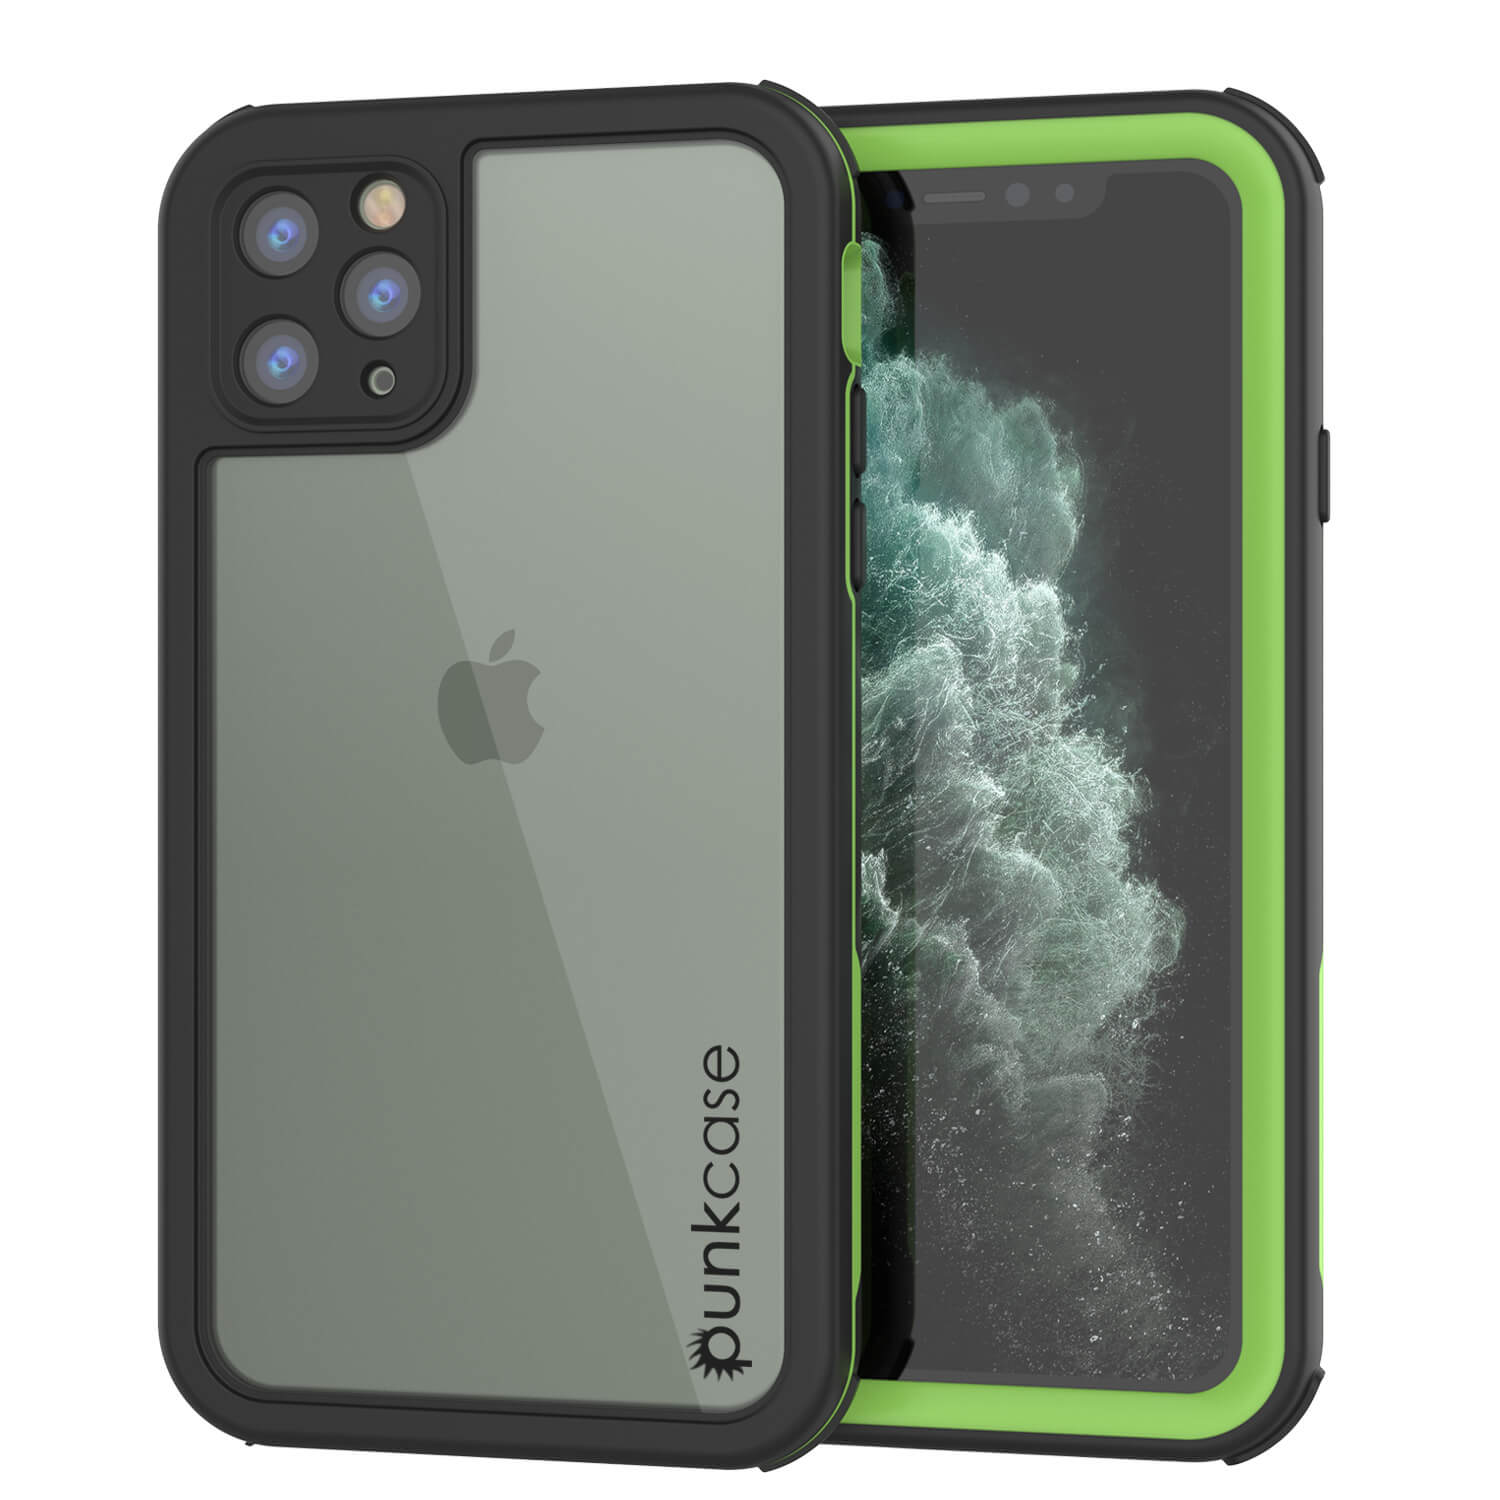 iPhone 11 Pro Max Waterproof IP68 Case, Punkcase [Green] [Rapture Series]  W/Built in Screen Protector